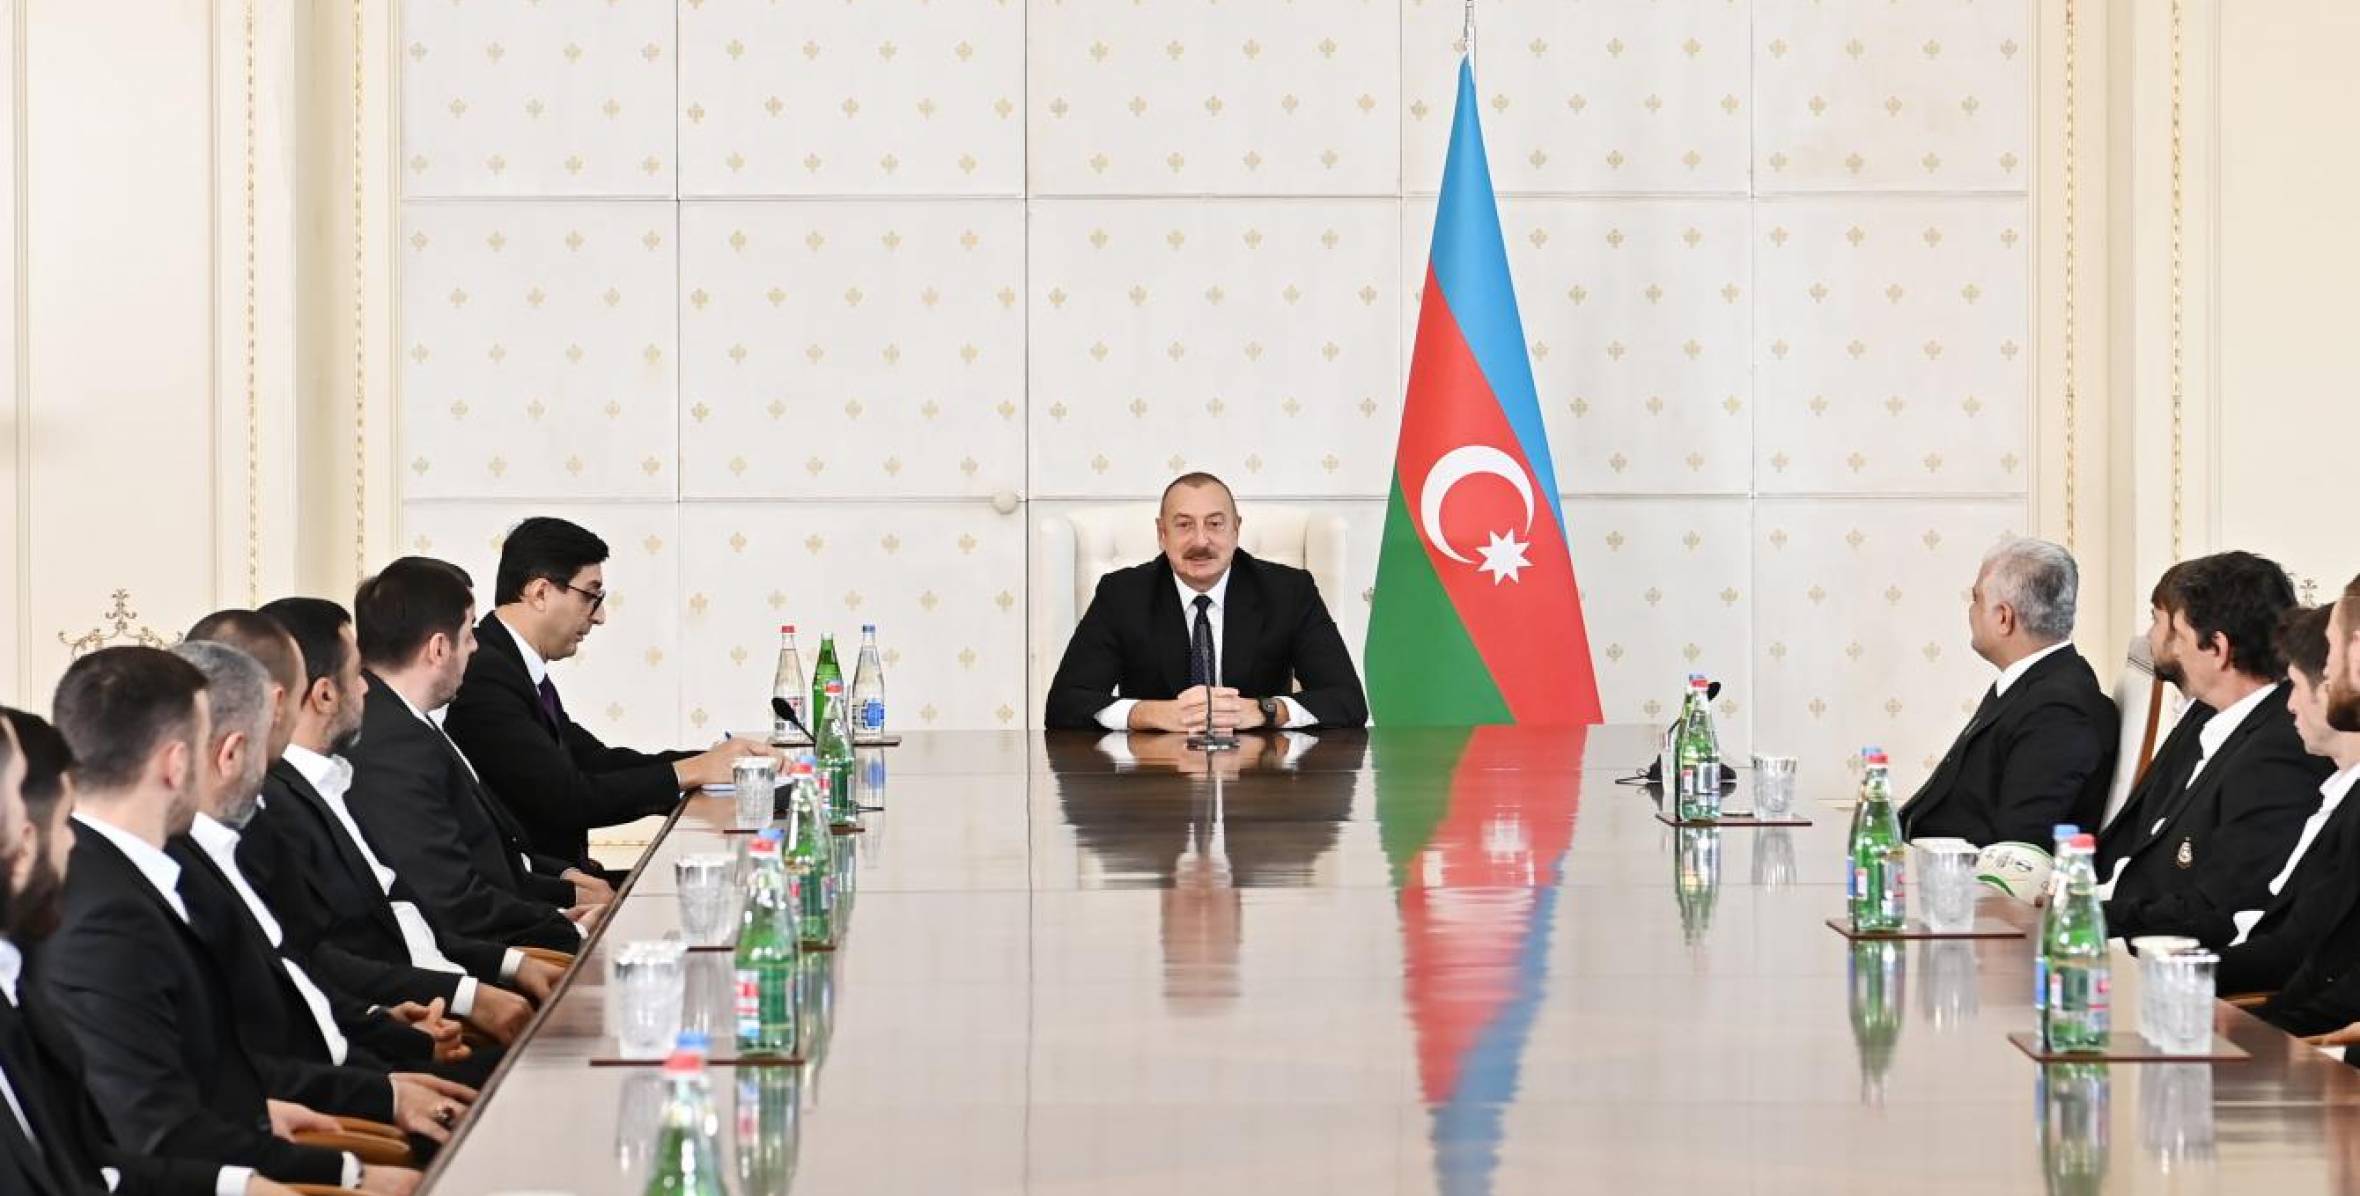 Speech by Ilham Aliyev at the reception of members of "Qarabag" football club